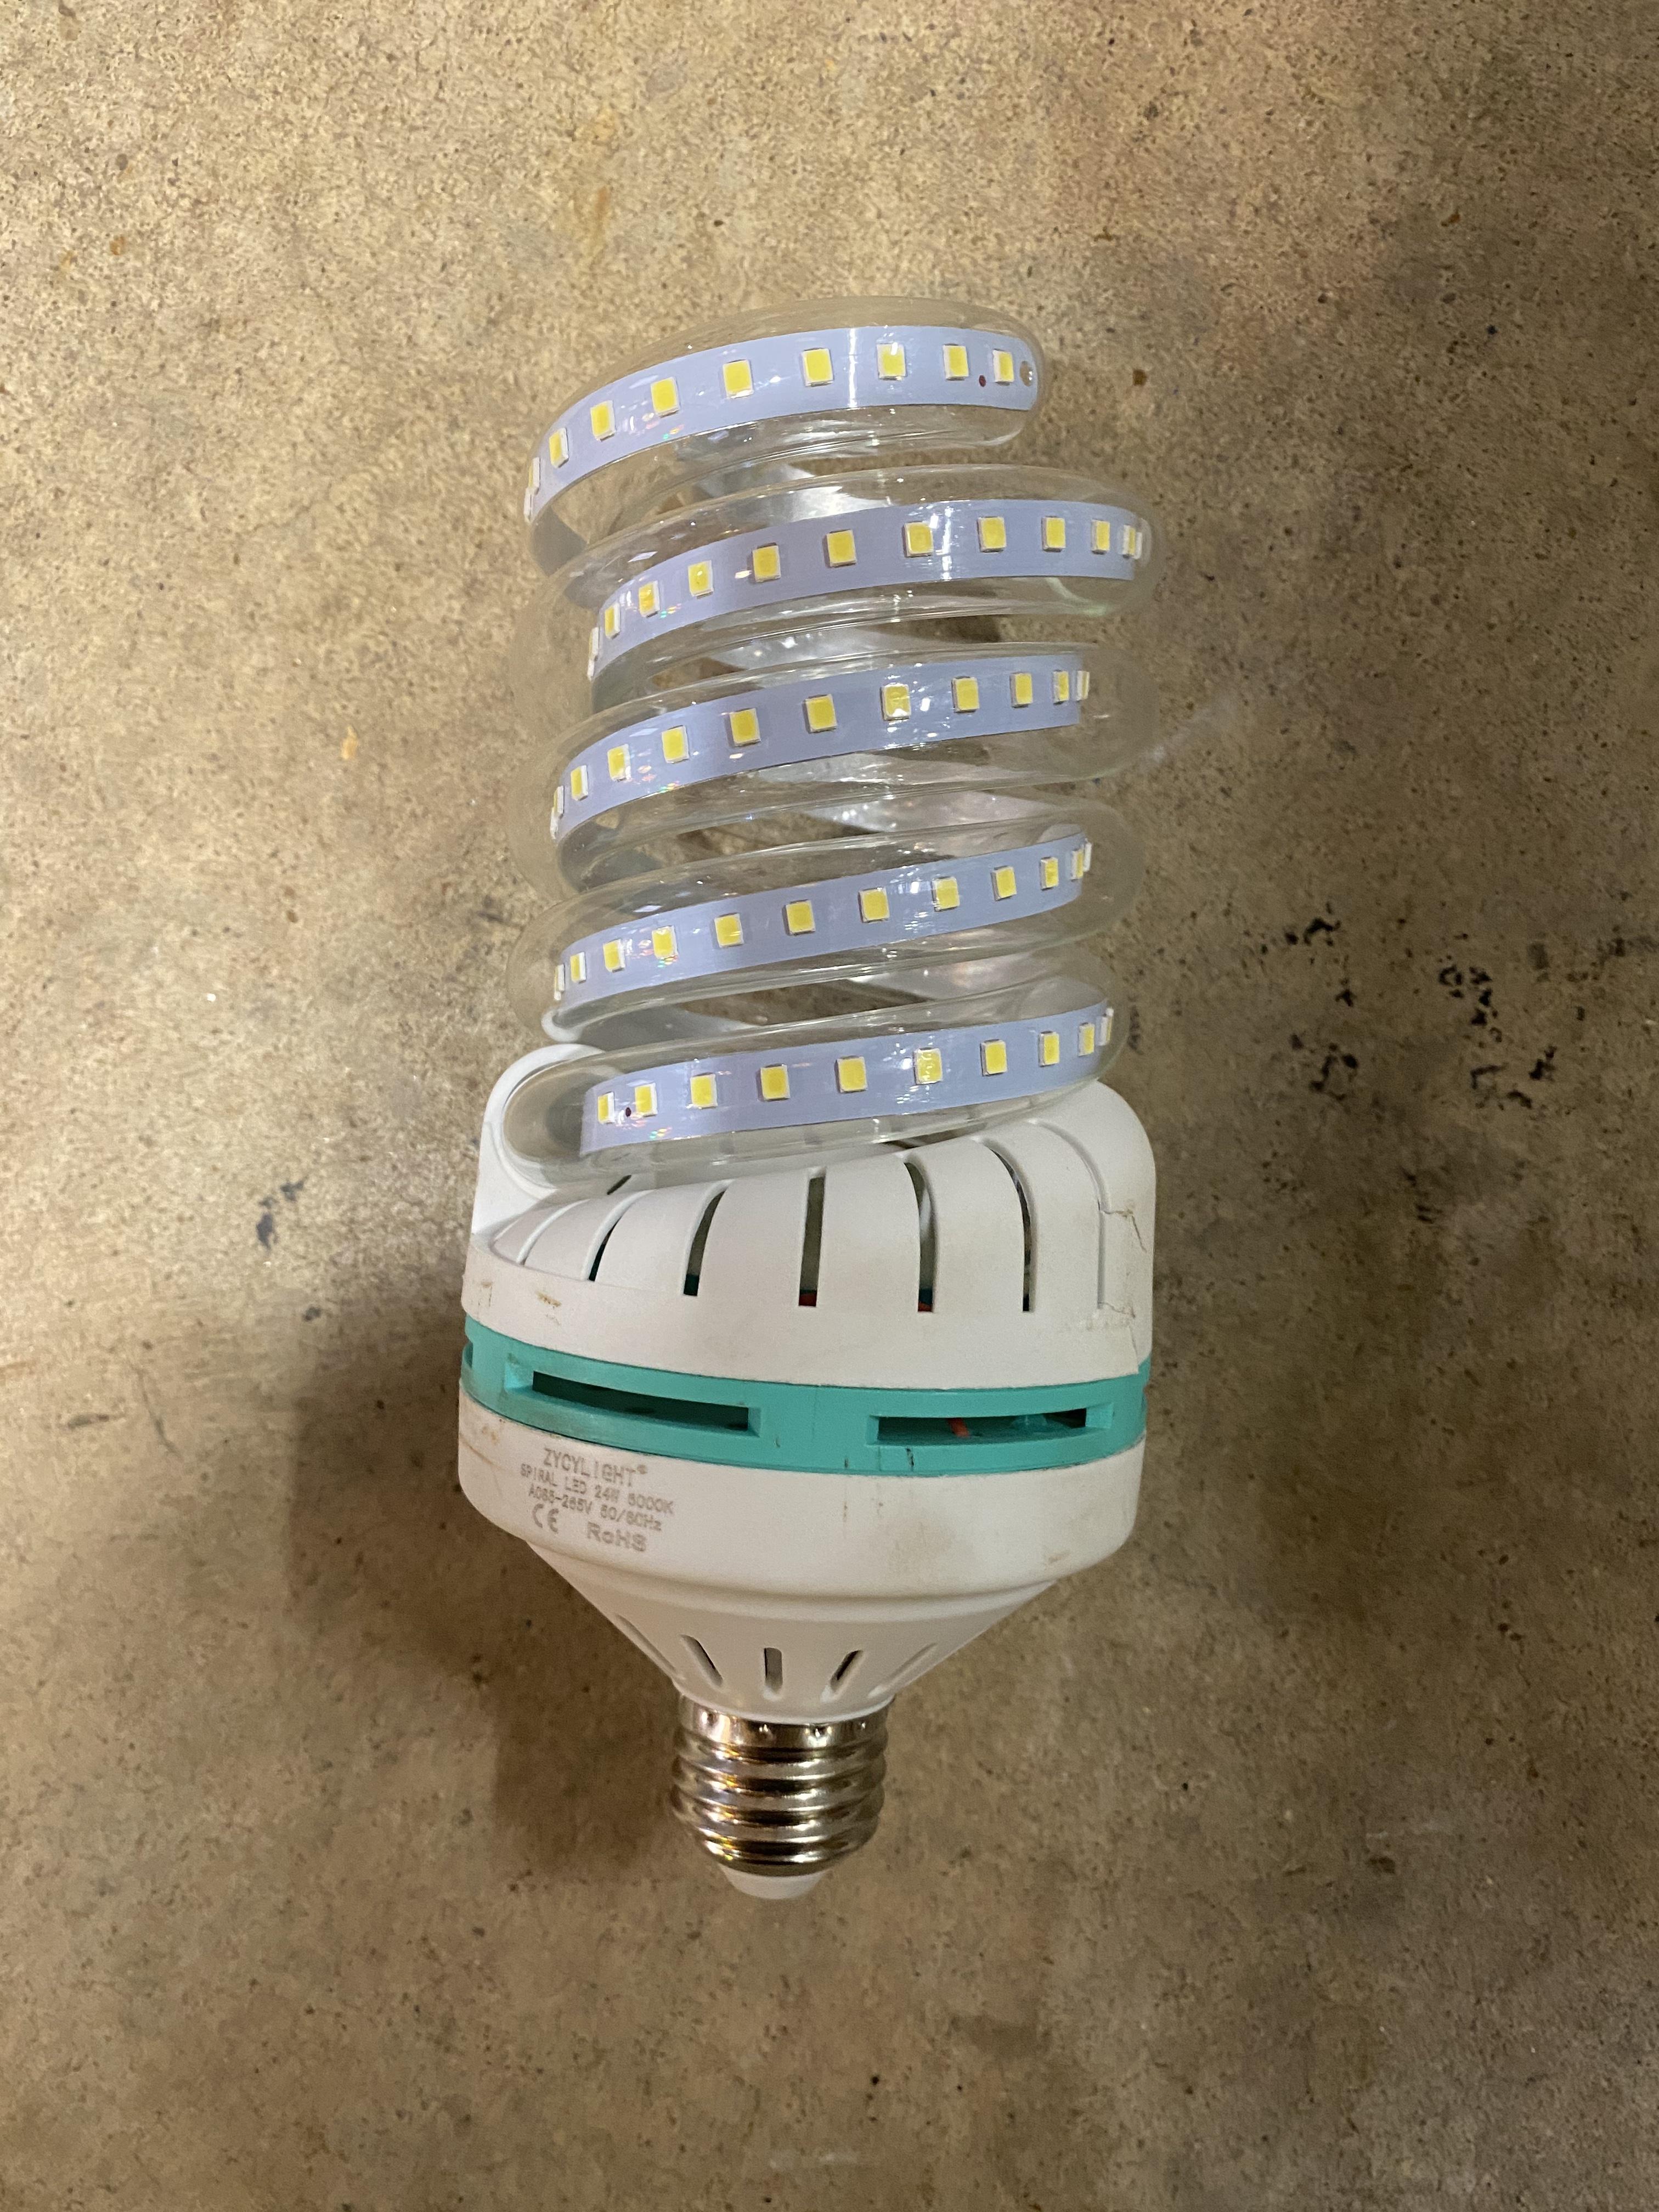 LED CFL Style Bulb.jpg